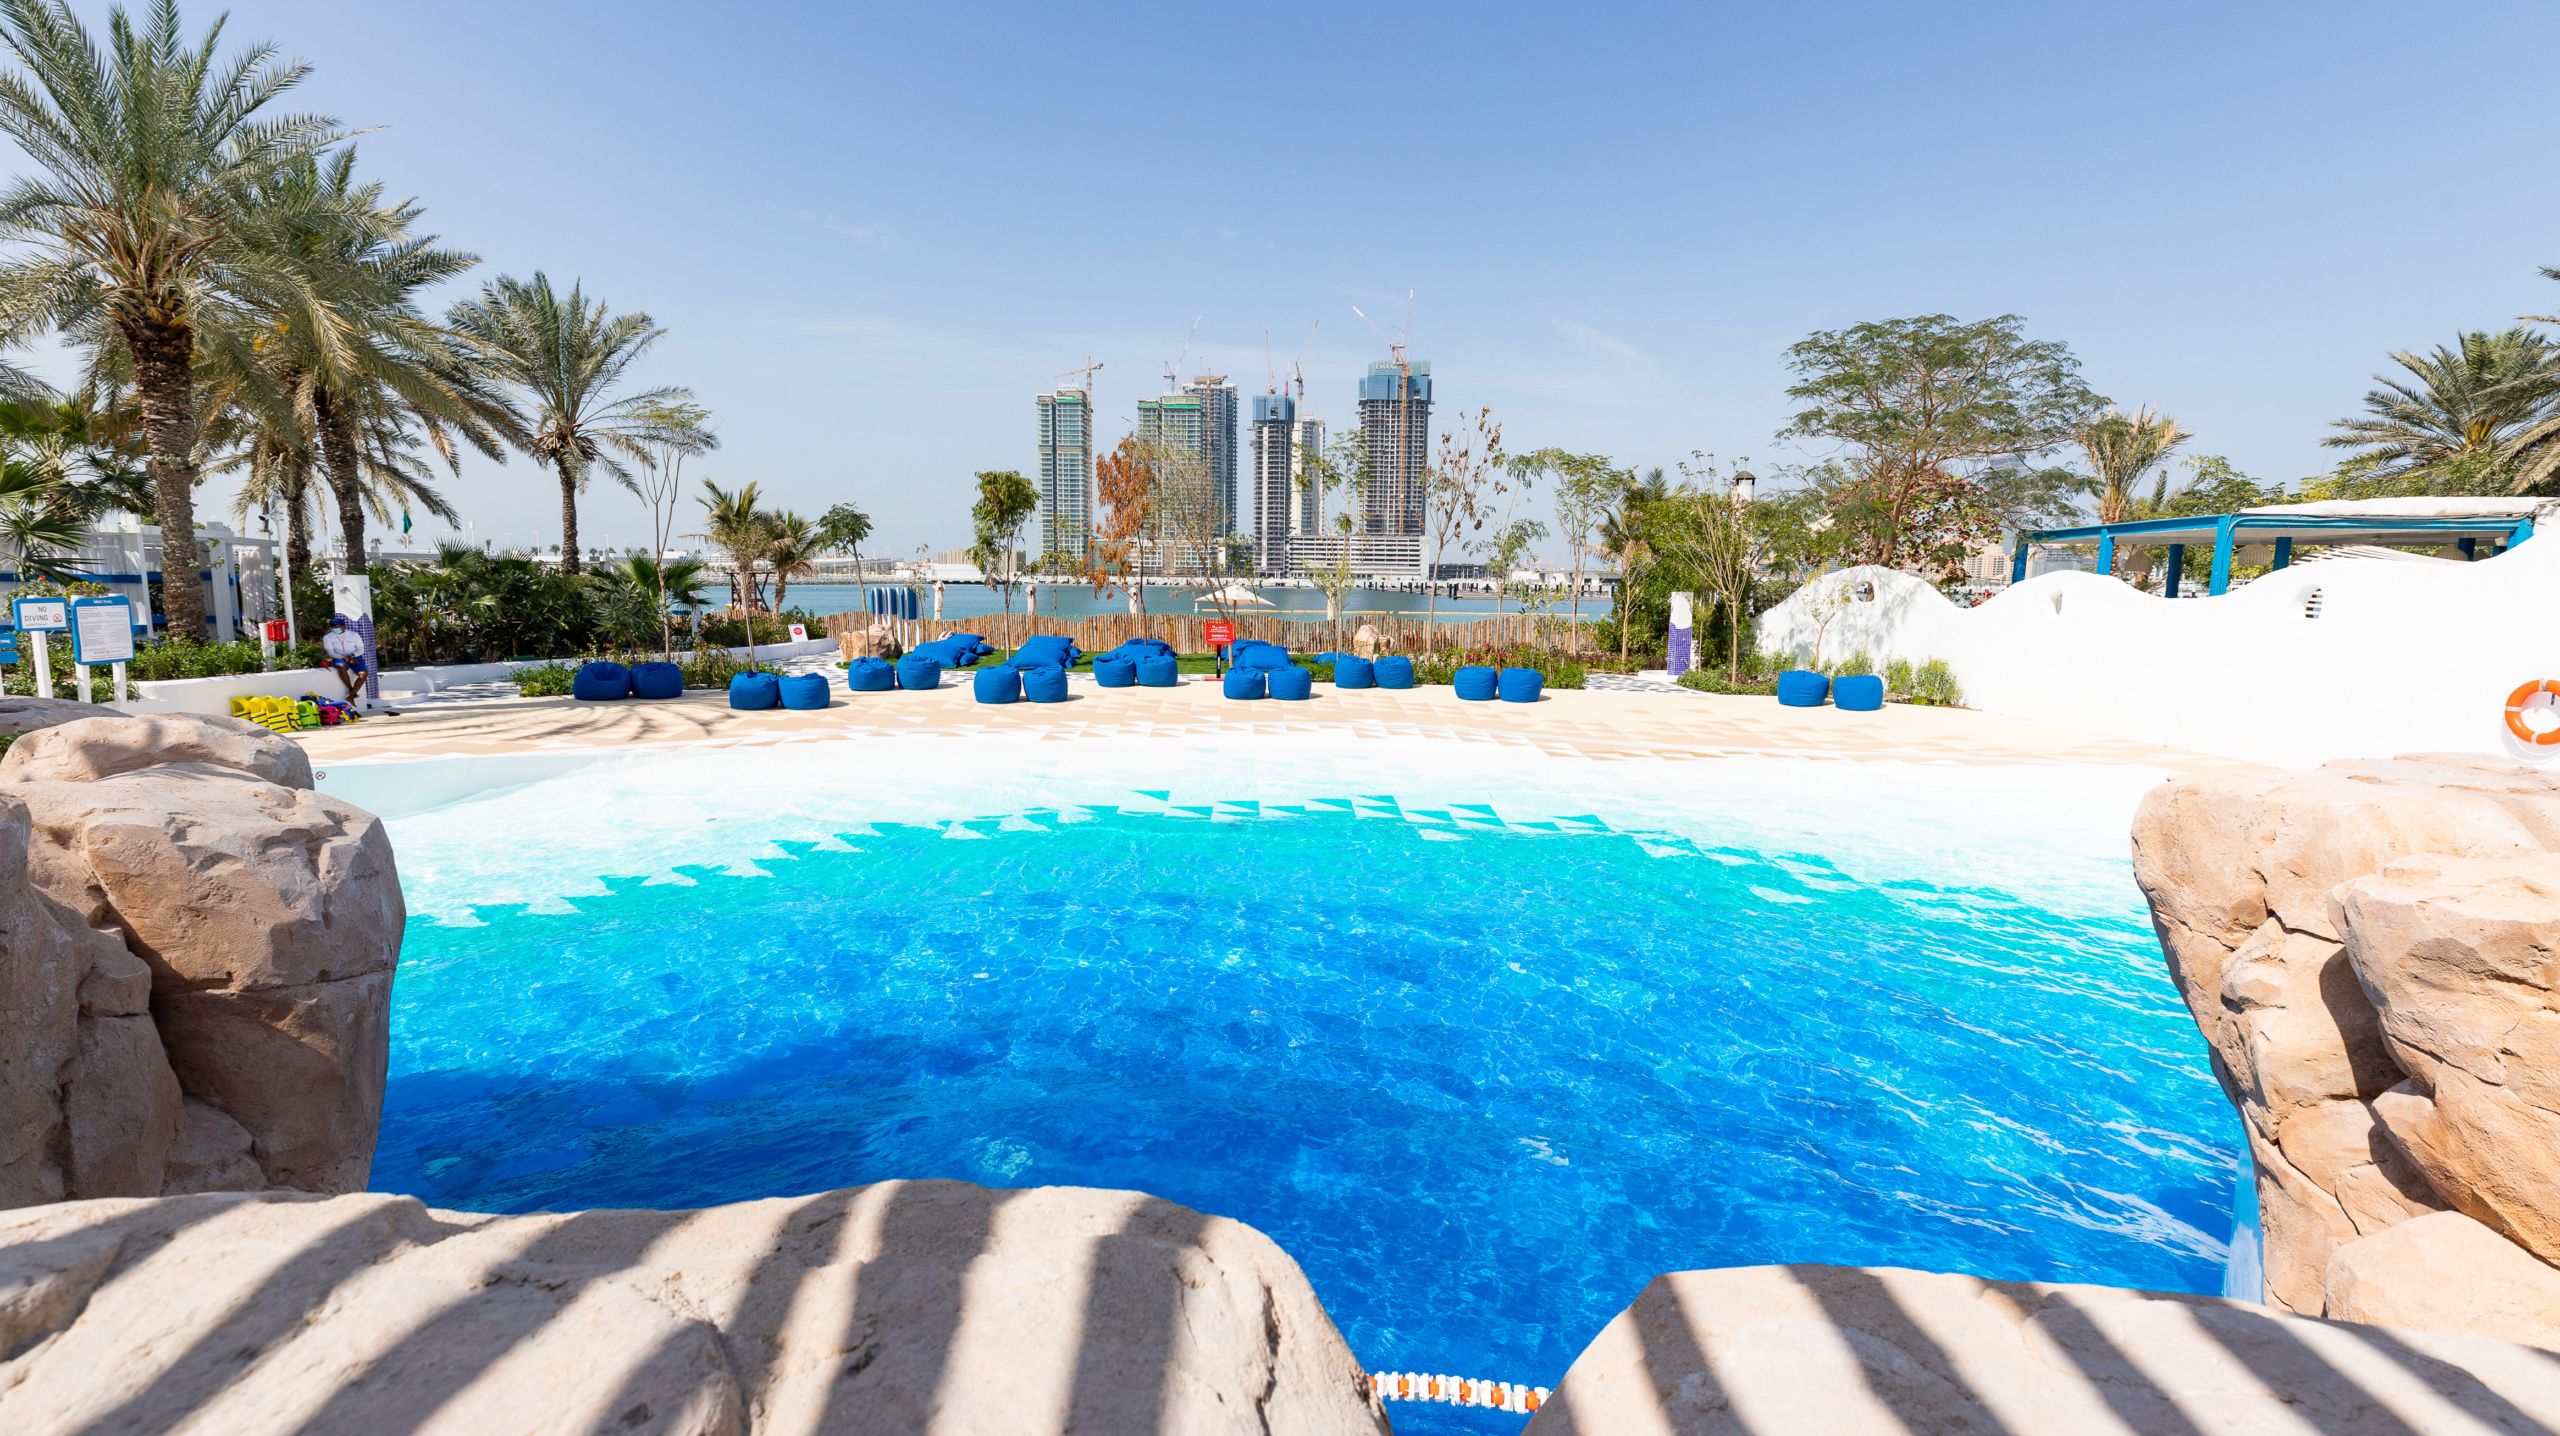 Children's Wave Pool and Life Floor, Jungle Bay Waterpark, Dubai, UAE